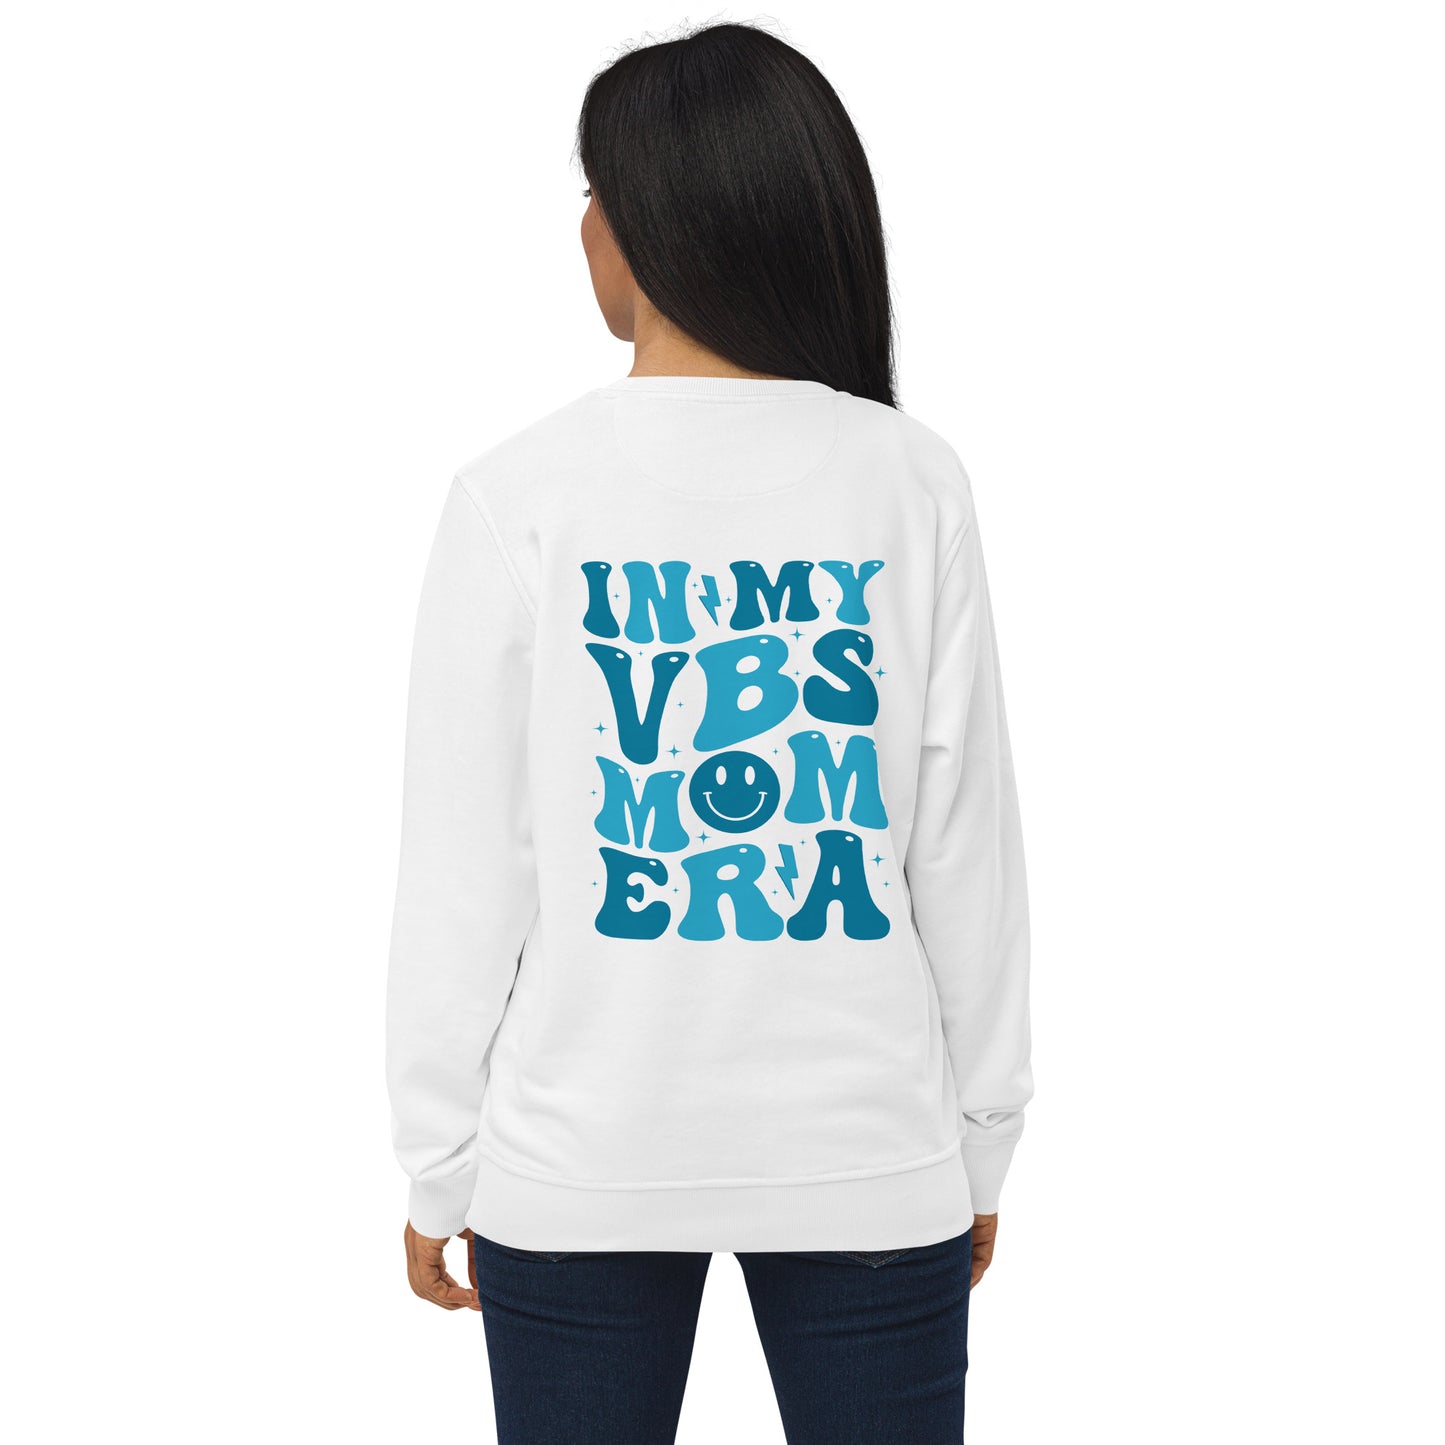 "In My VBS Mom Era" Unisex Organic Sweatshirt